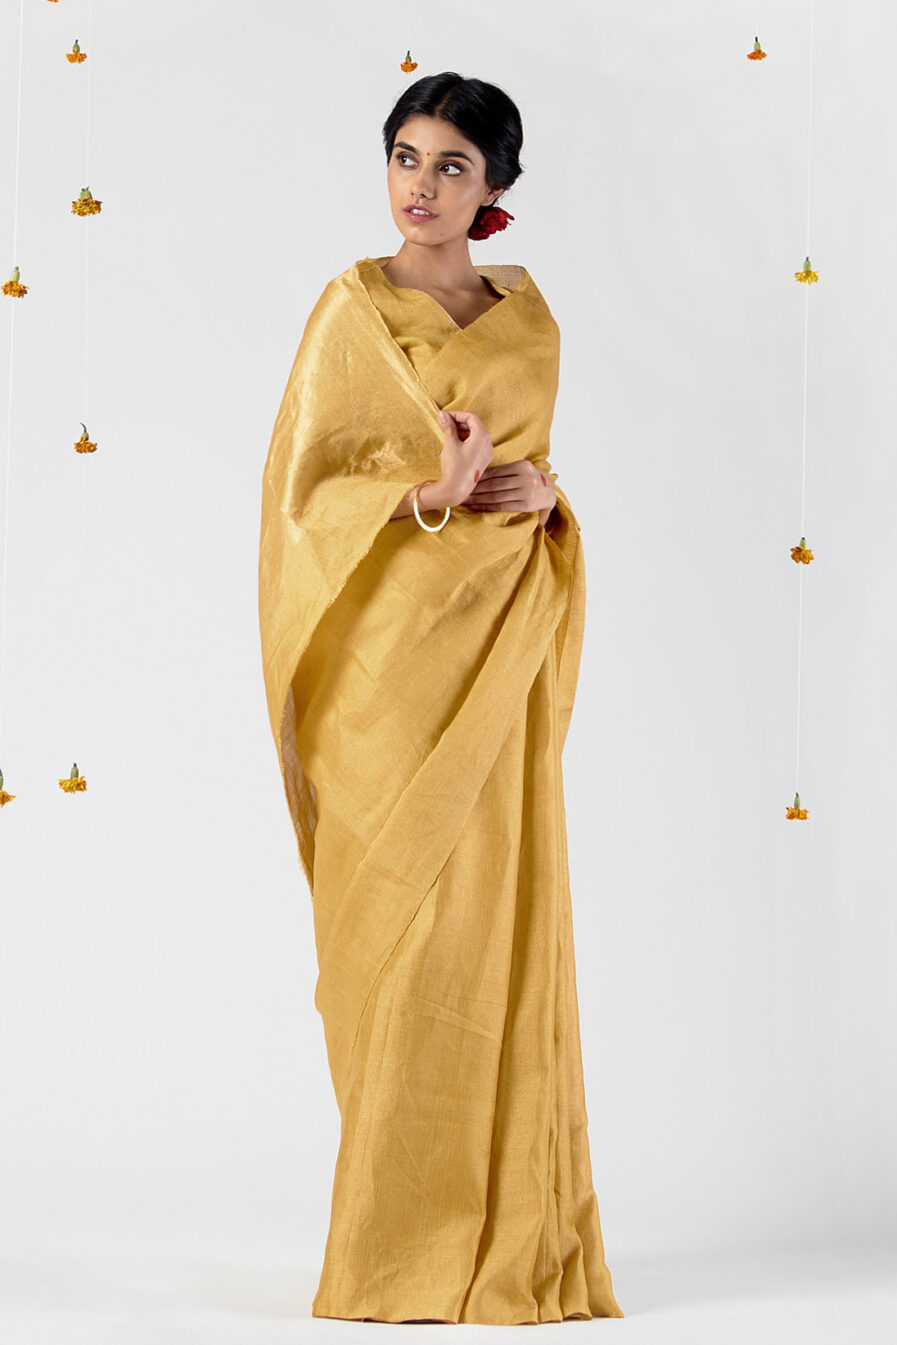 Anavila Festive jacquard sari